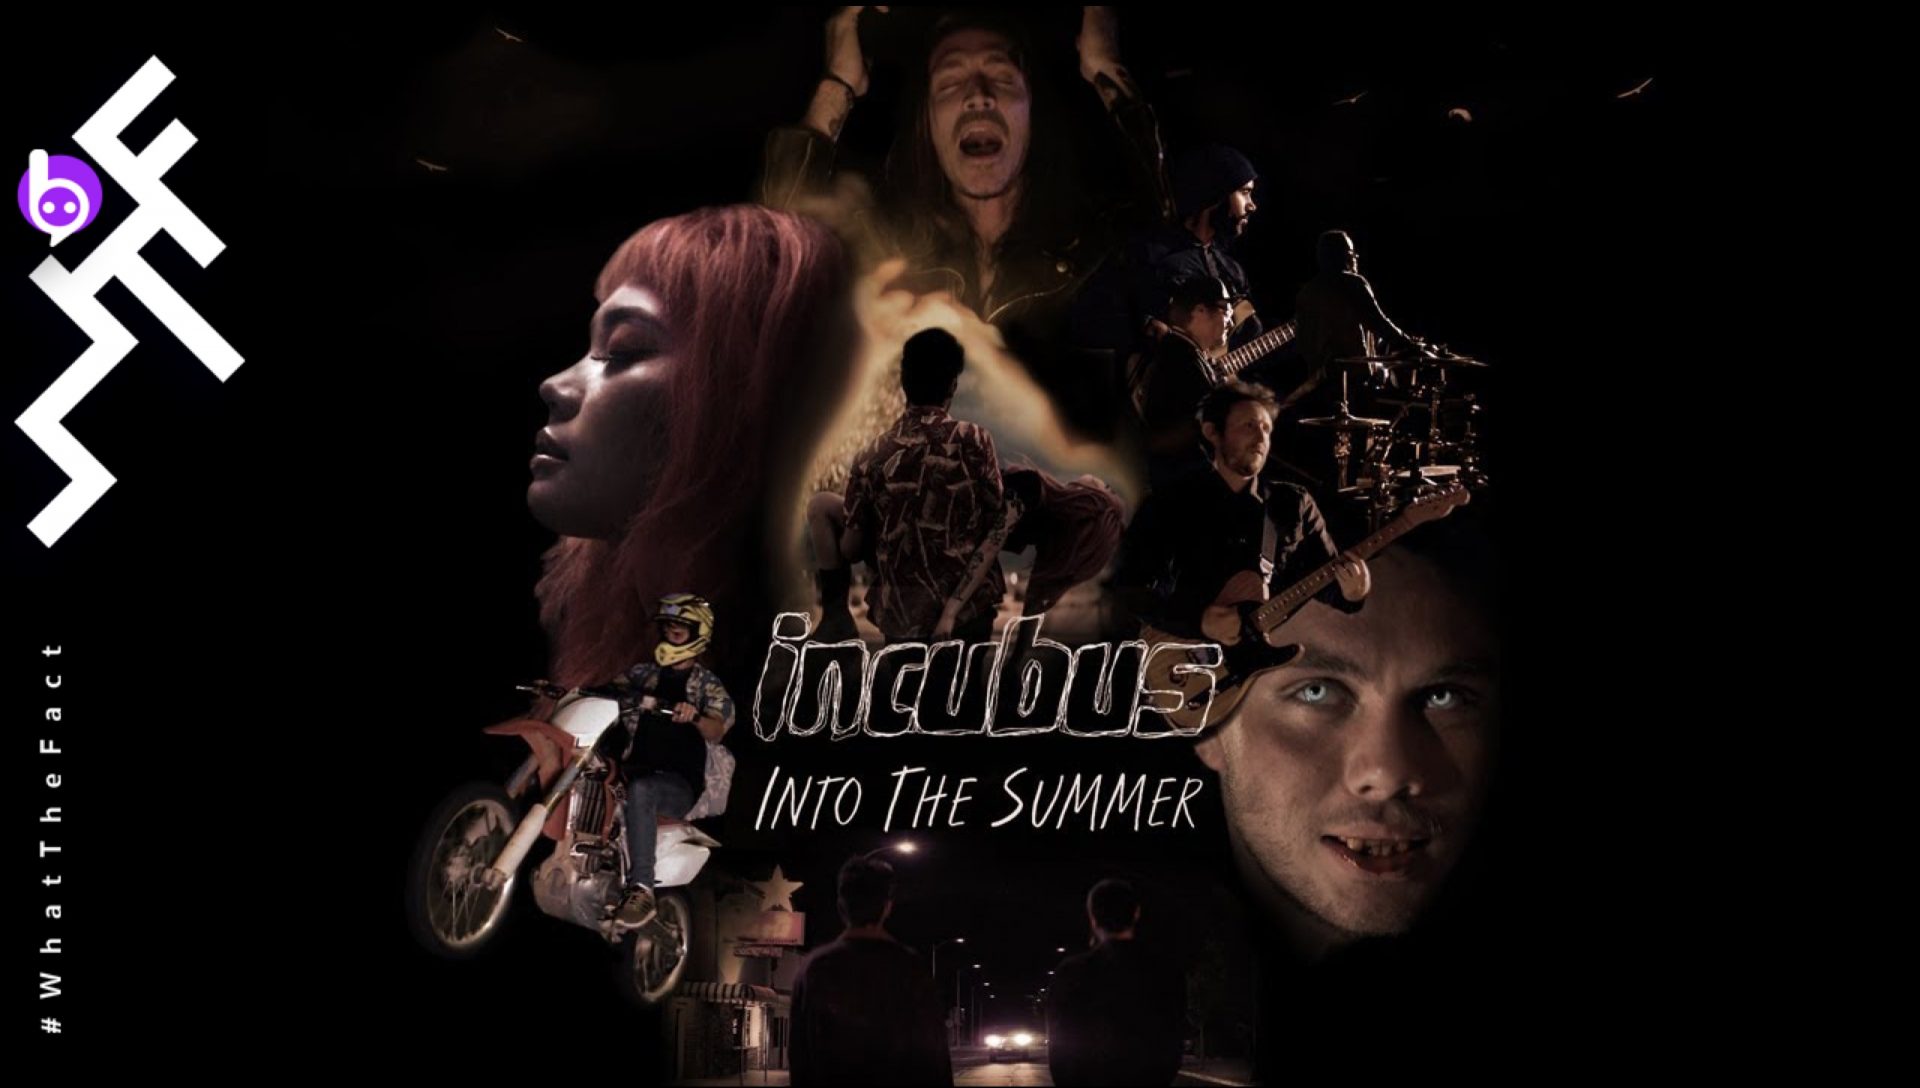 Incubus กลับมาพร้อมซิงเกิลใหม่ “Into The Summer” ที่เพลงและ MV ได้รับแรงบันดาลใจมาจากยุค 80